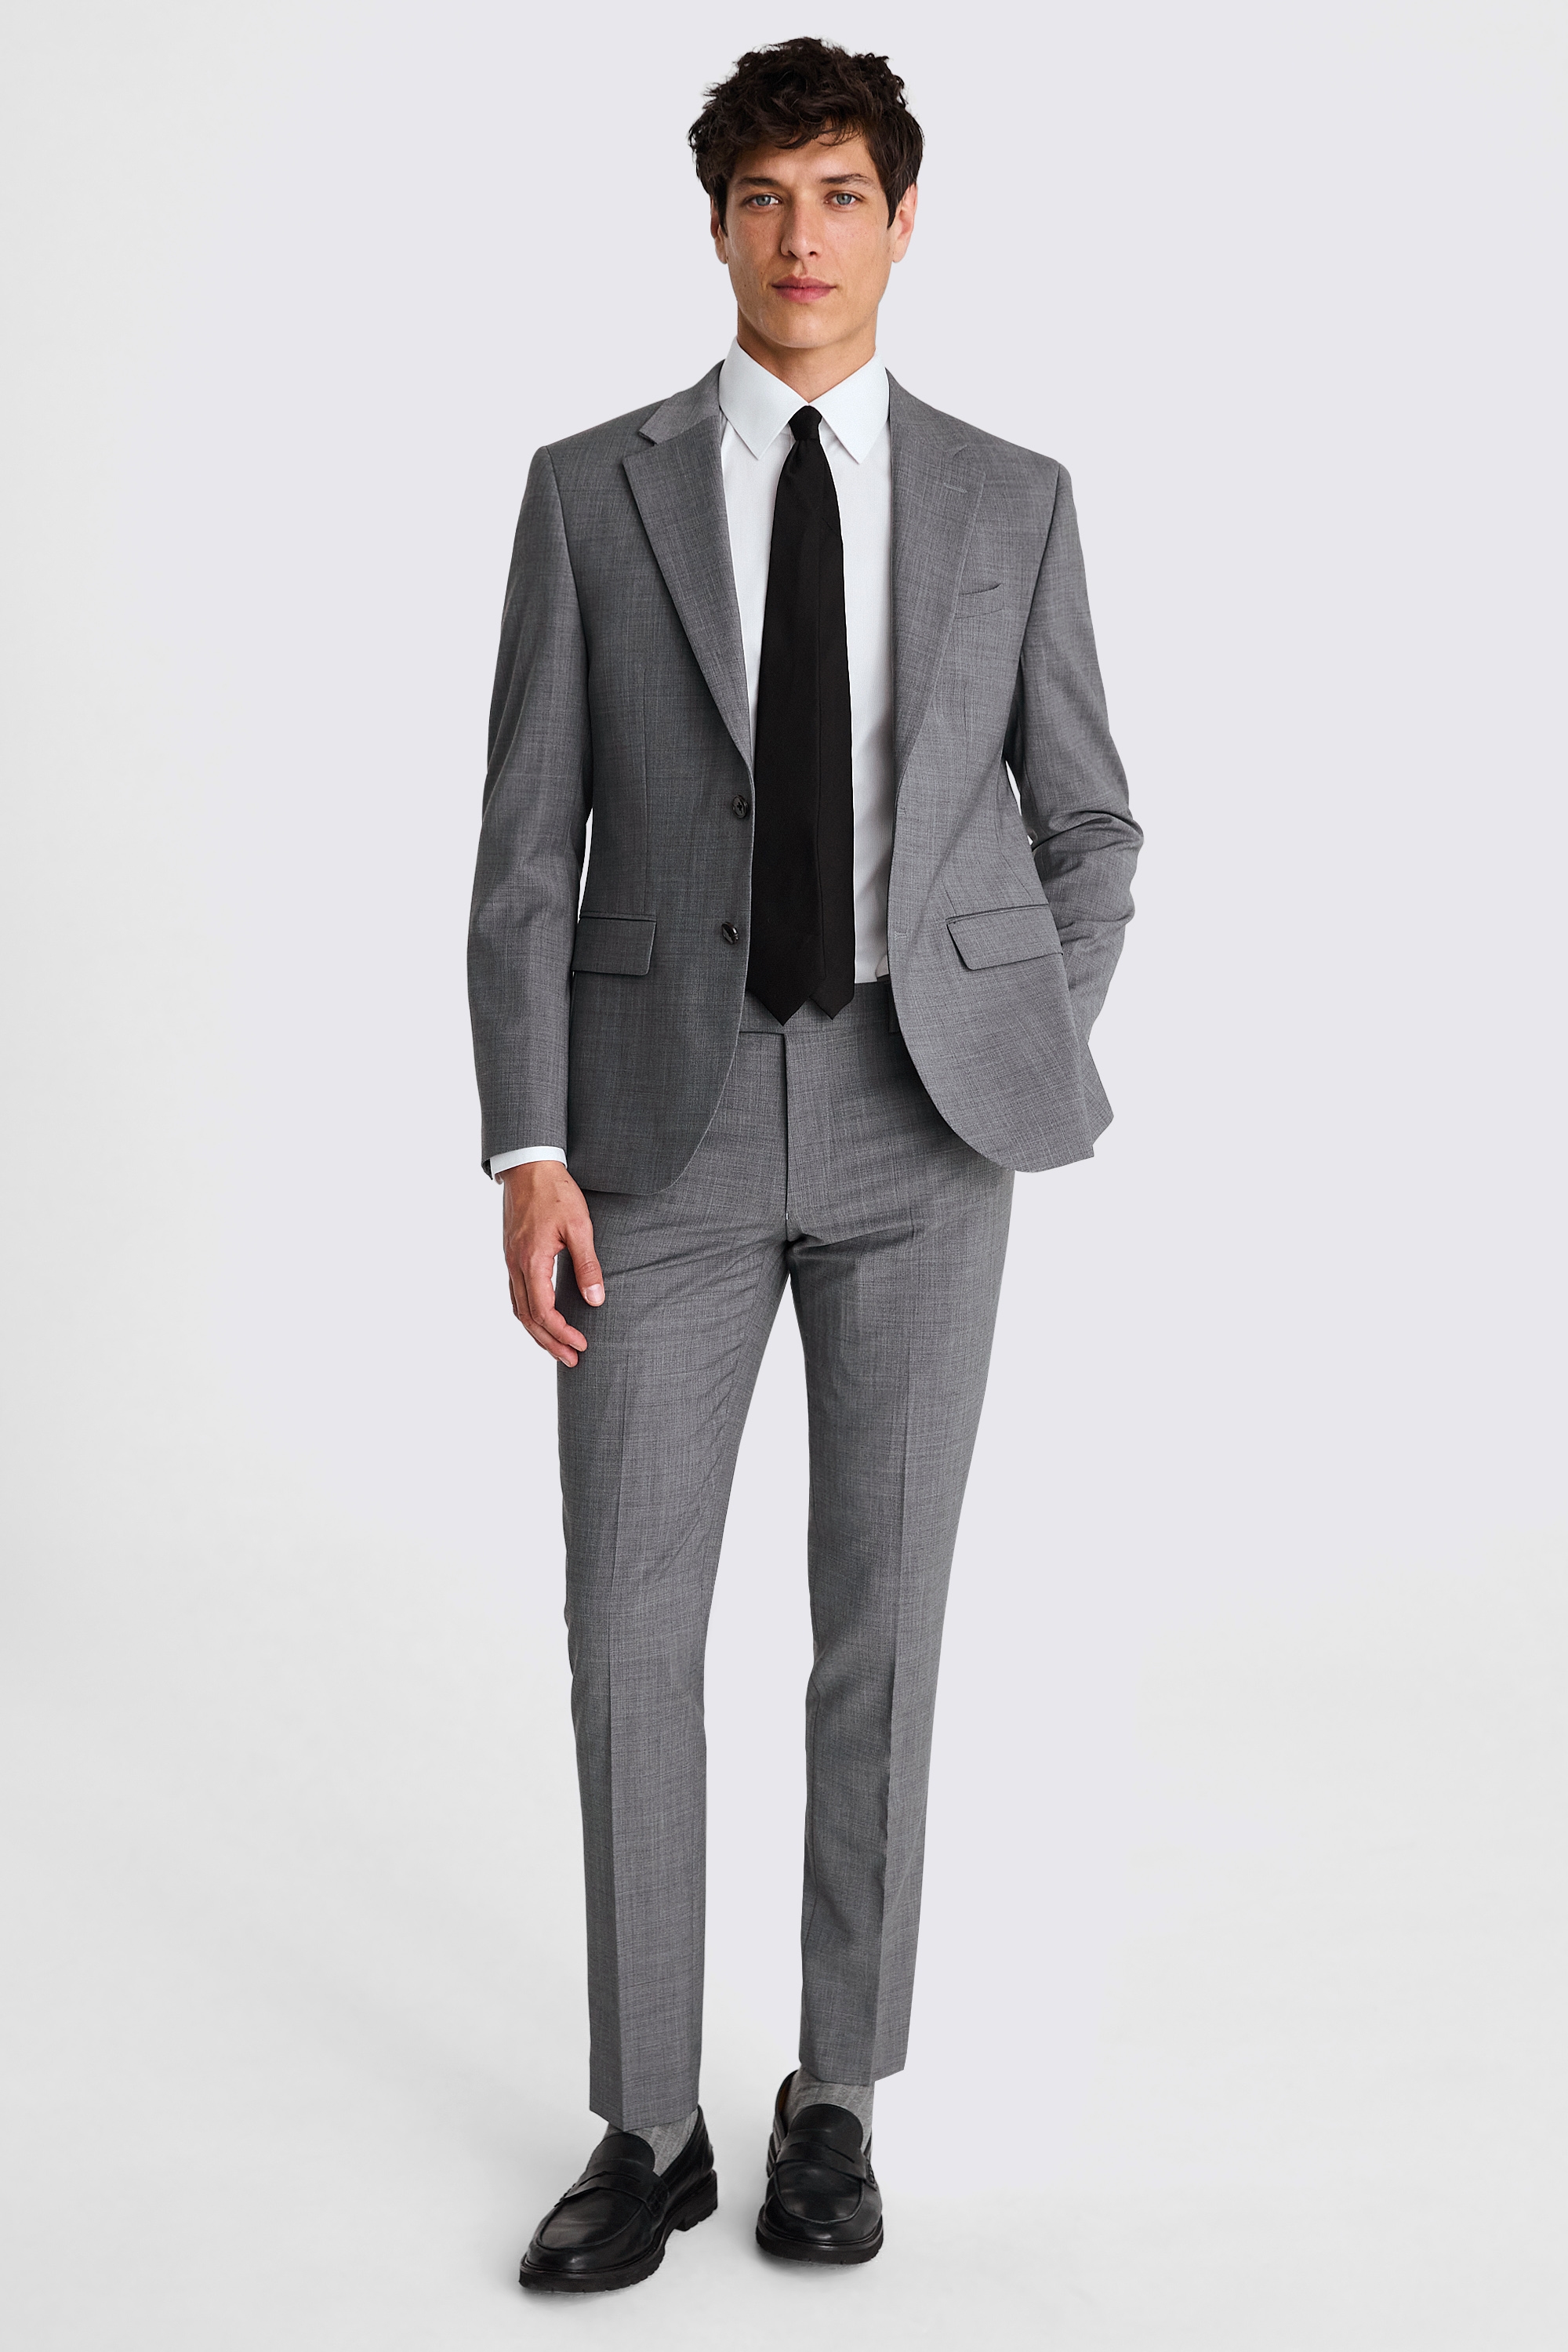 DKNY Slim Fit Grey Performance Jacket | Buy Online at Moss